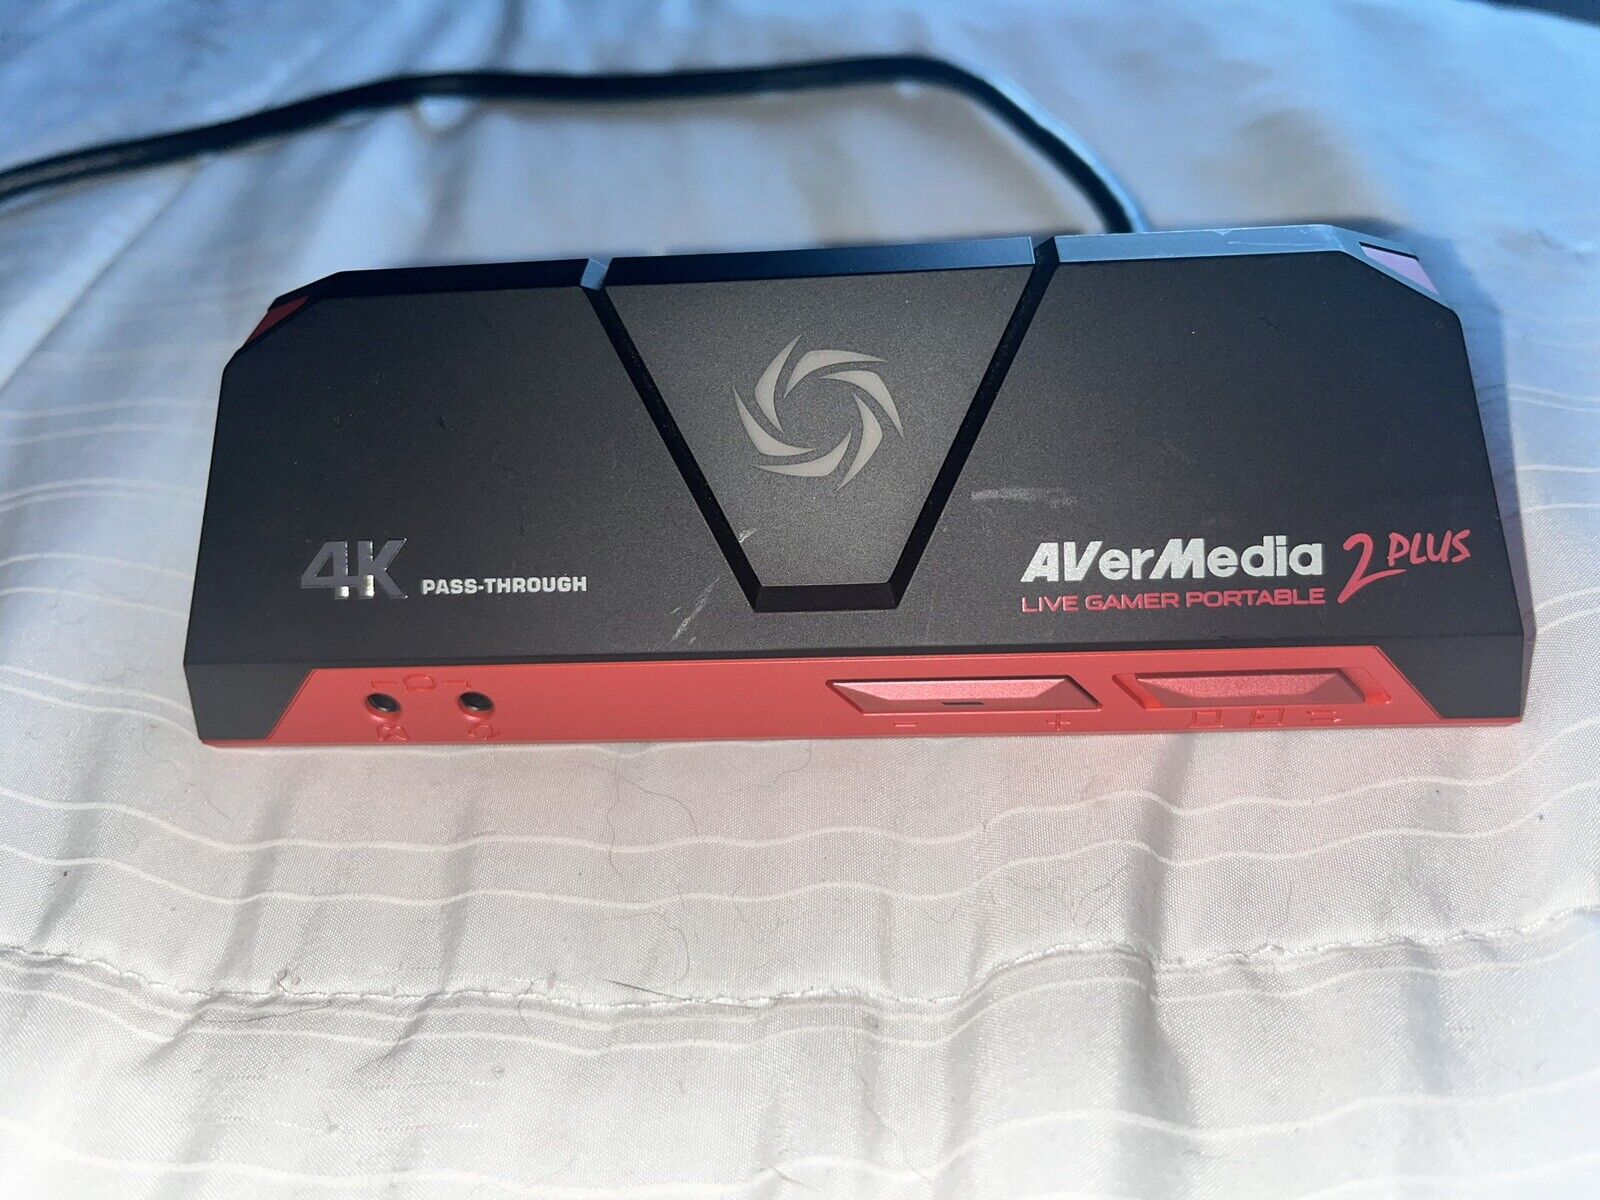 AVerMedia GC513 Live Gamer Portable 2 Plus, 4K Pass-Through Capture Card